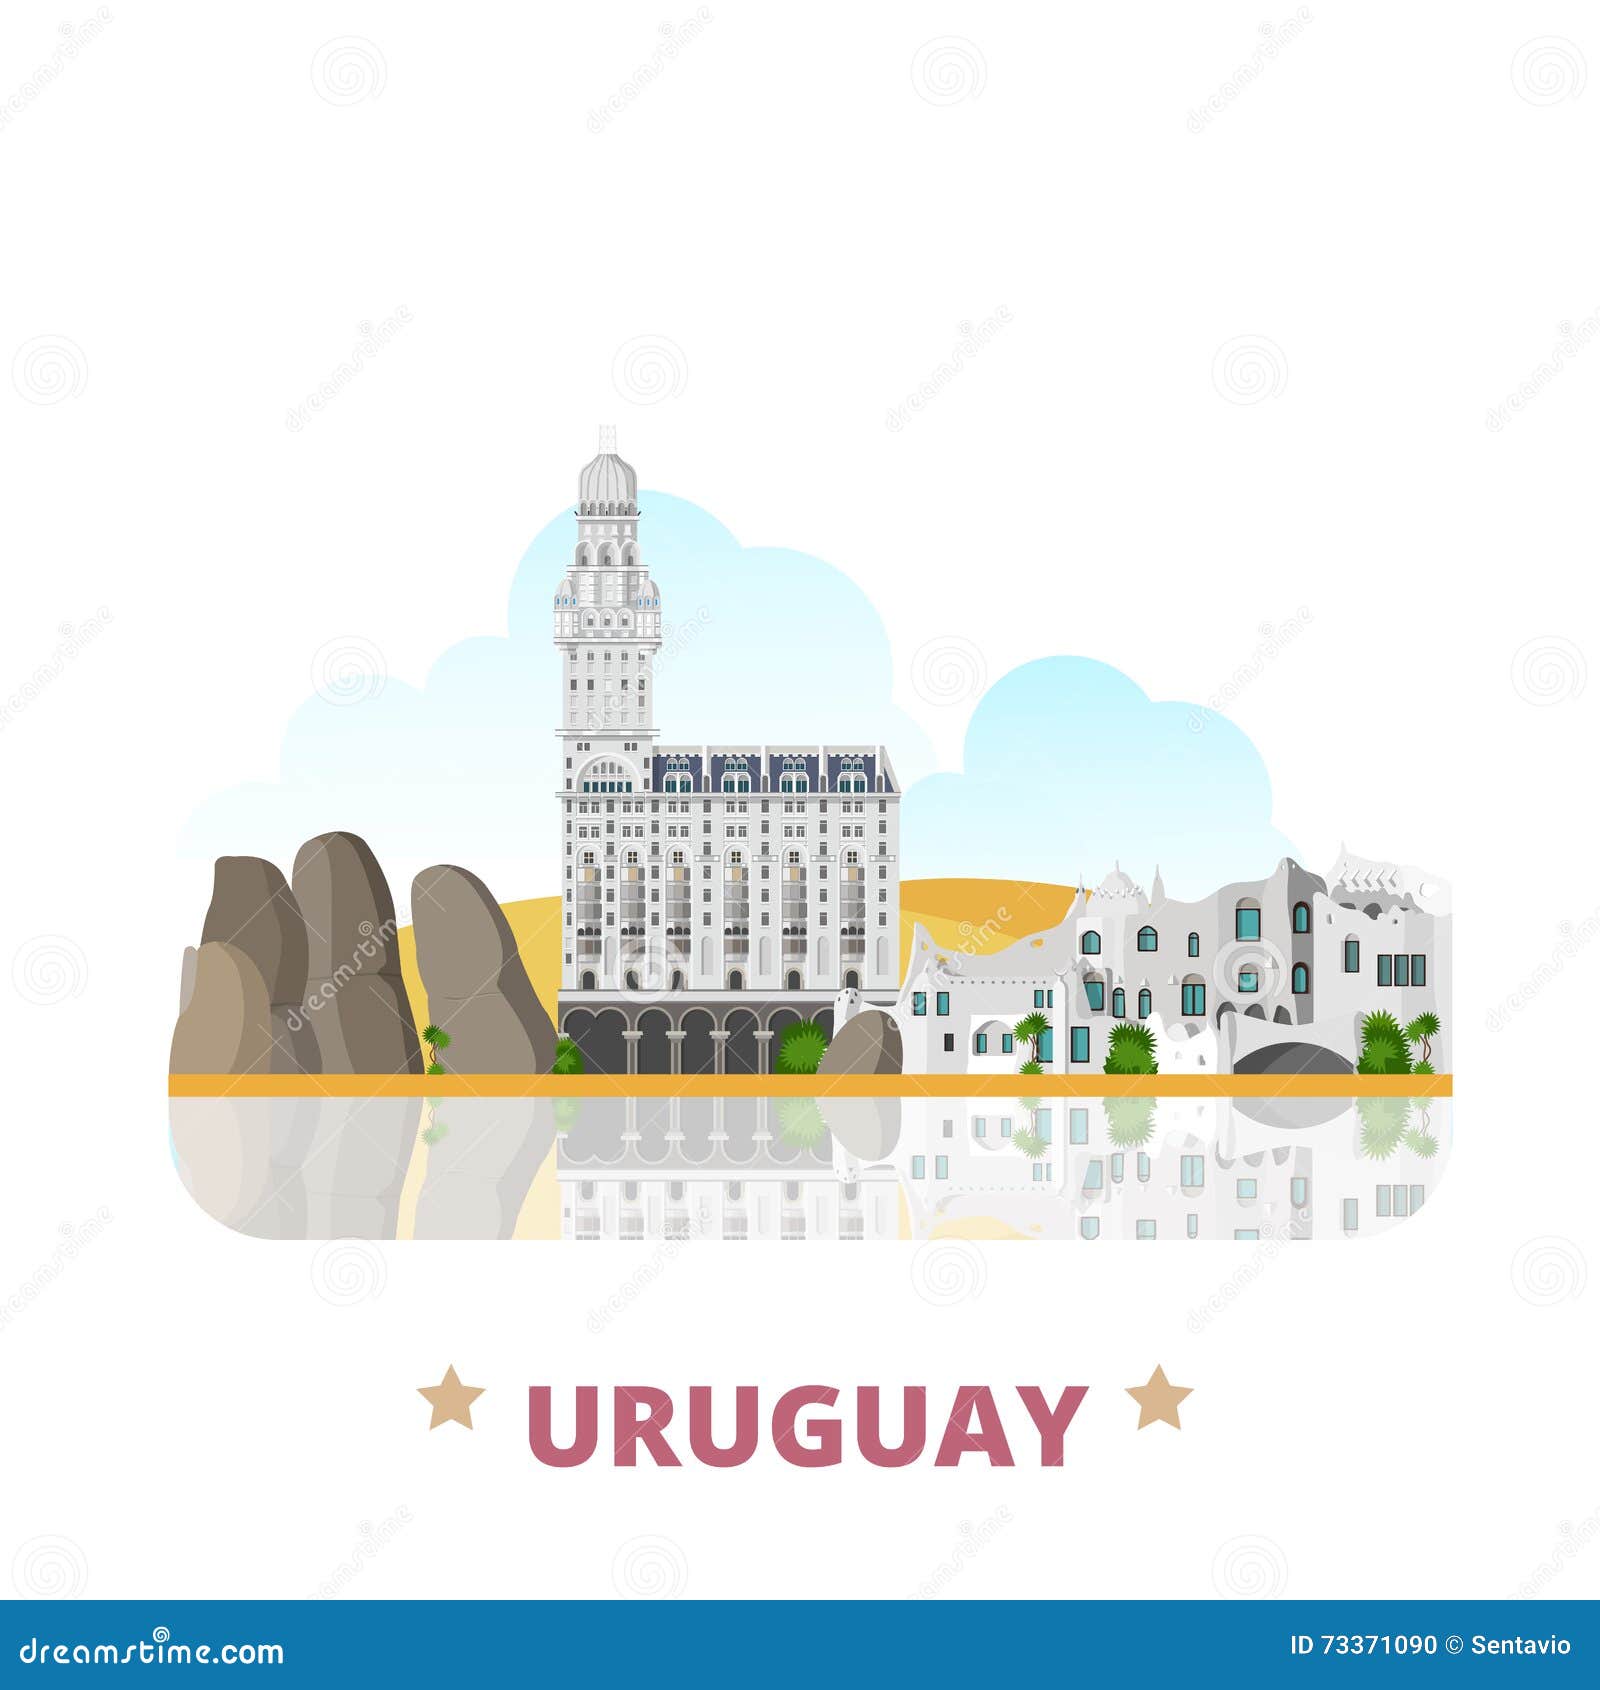 uruguay country  template flat cartoon style